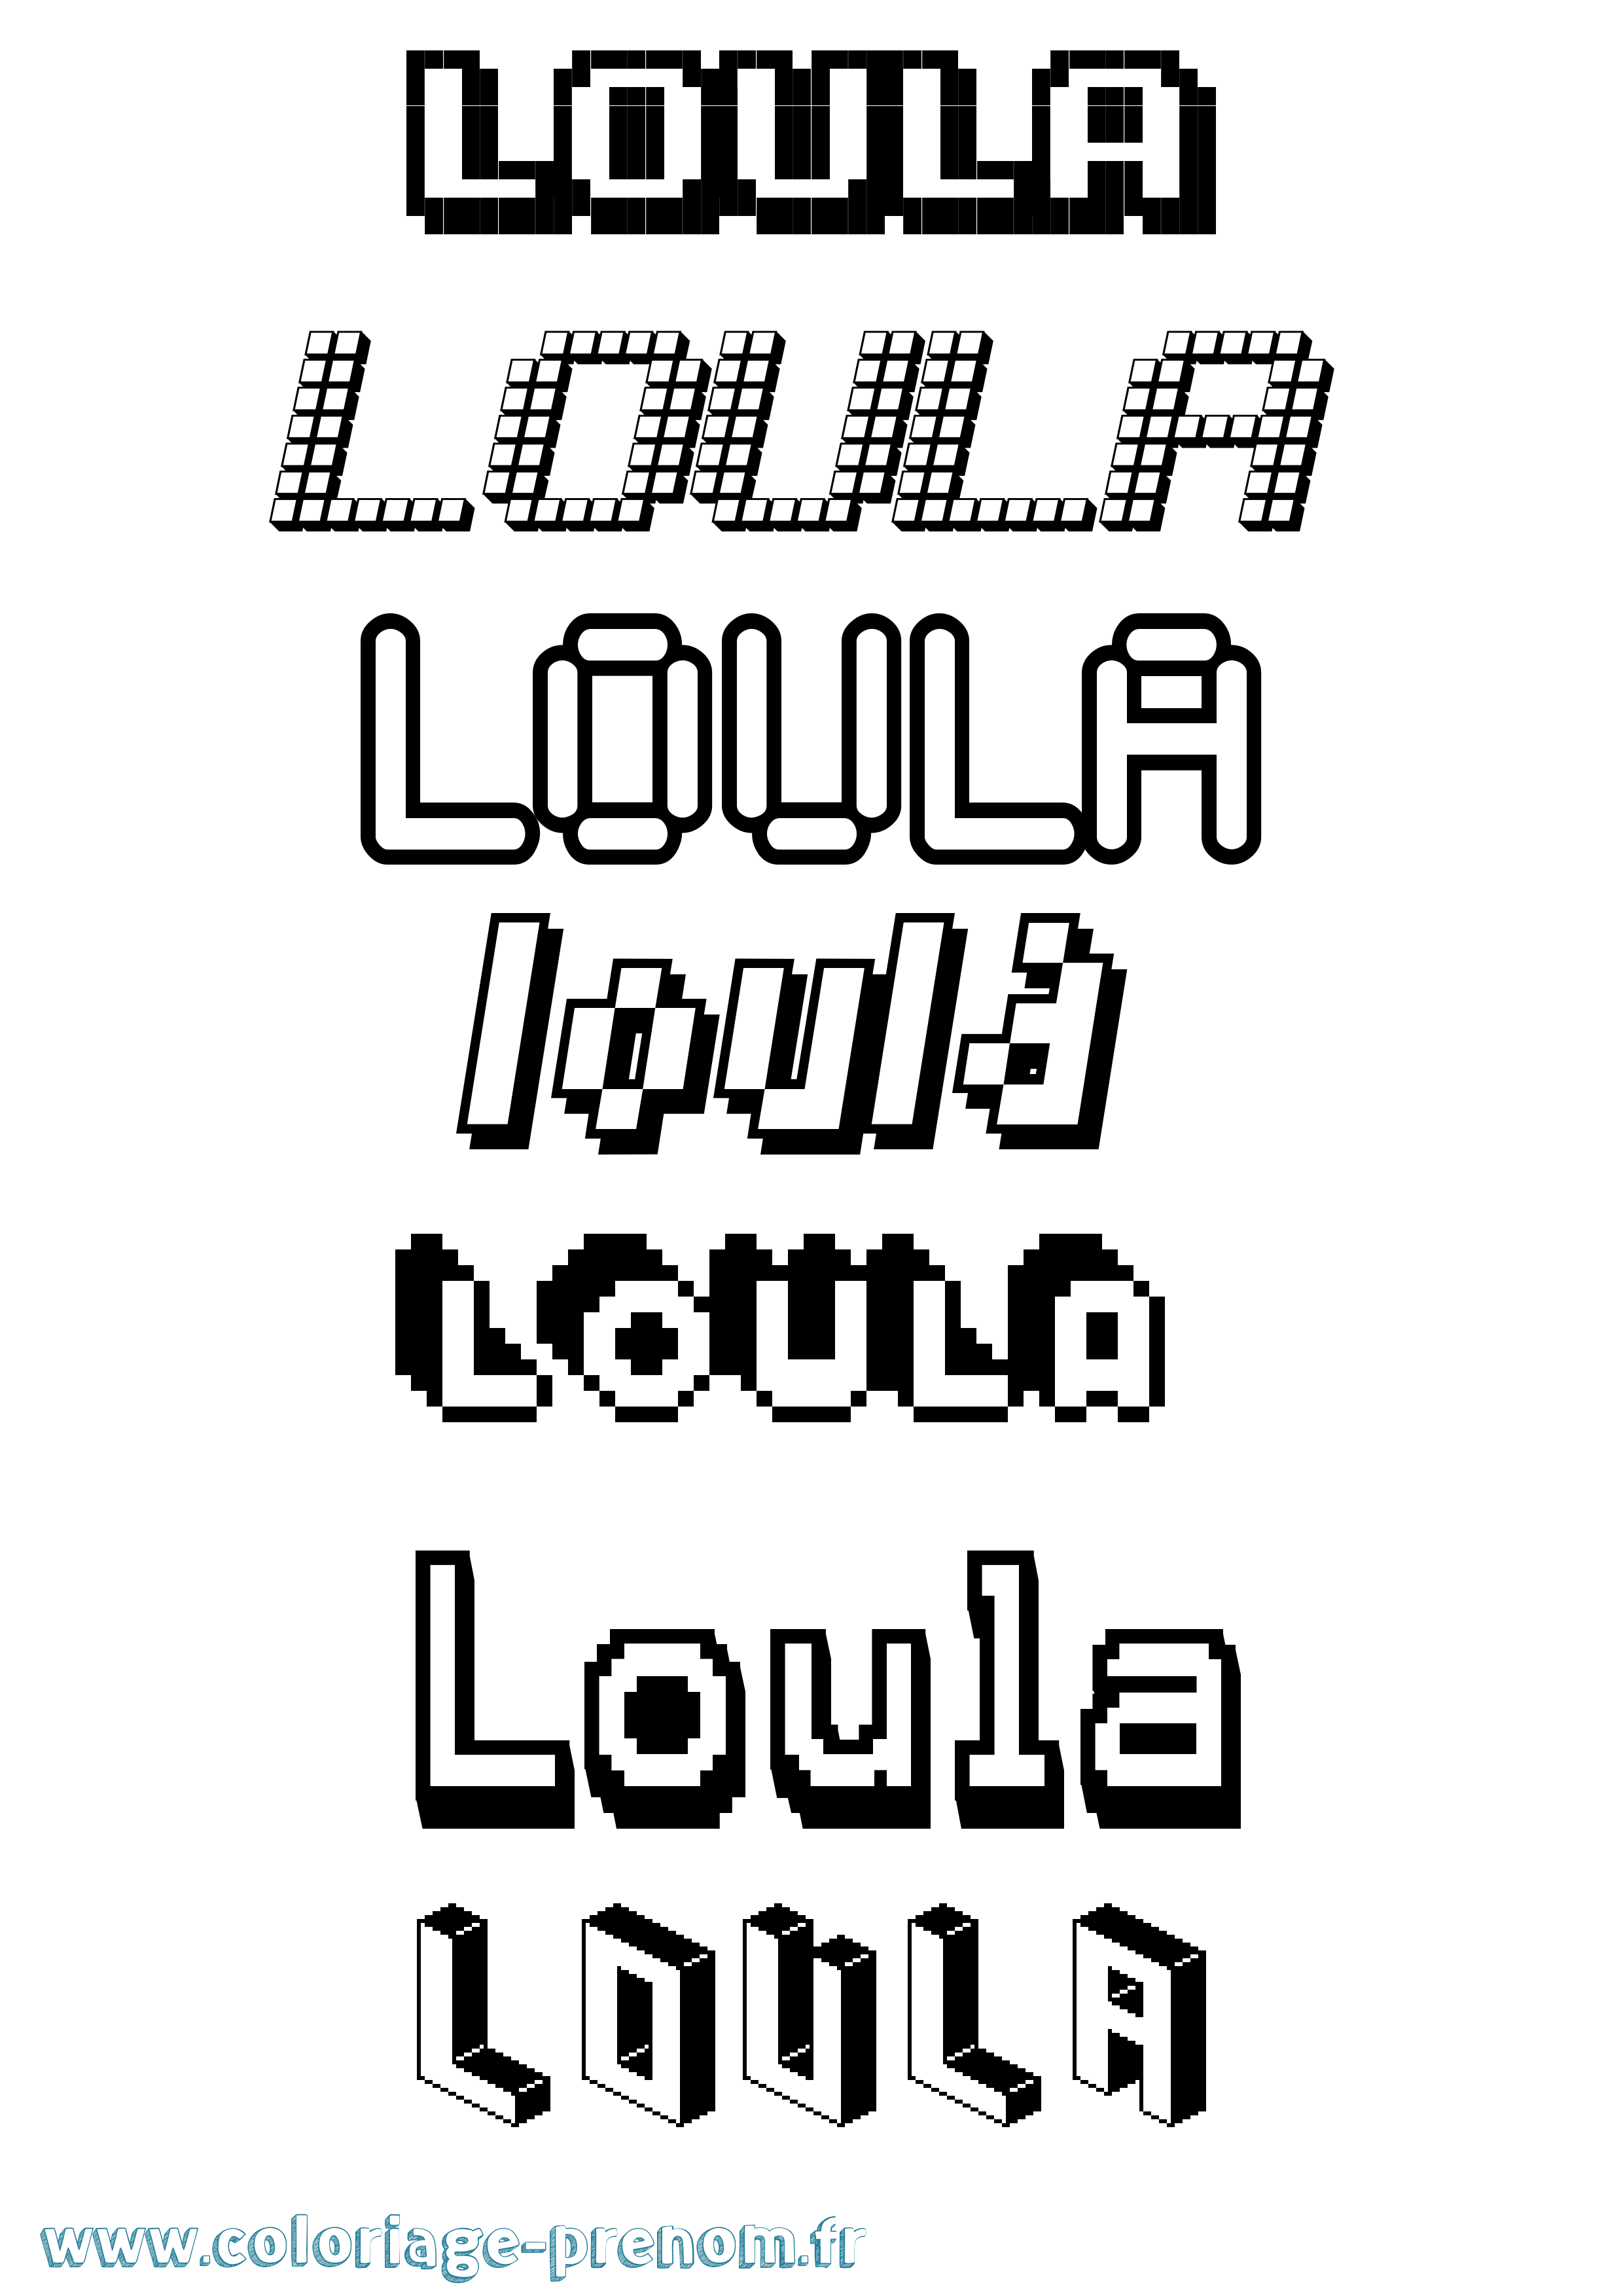 Coloriage prénom Loula